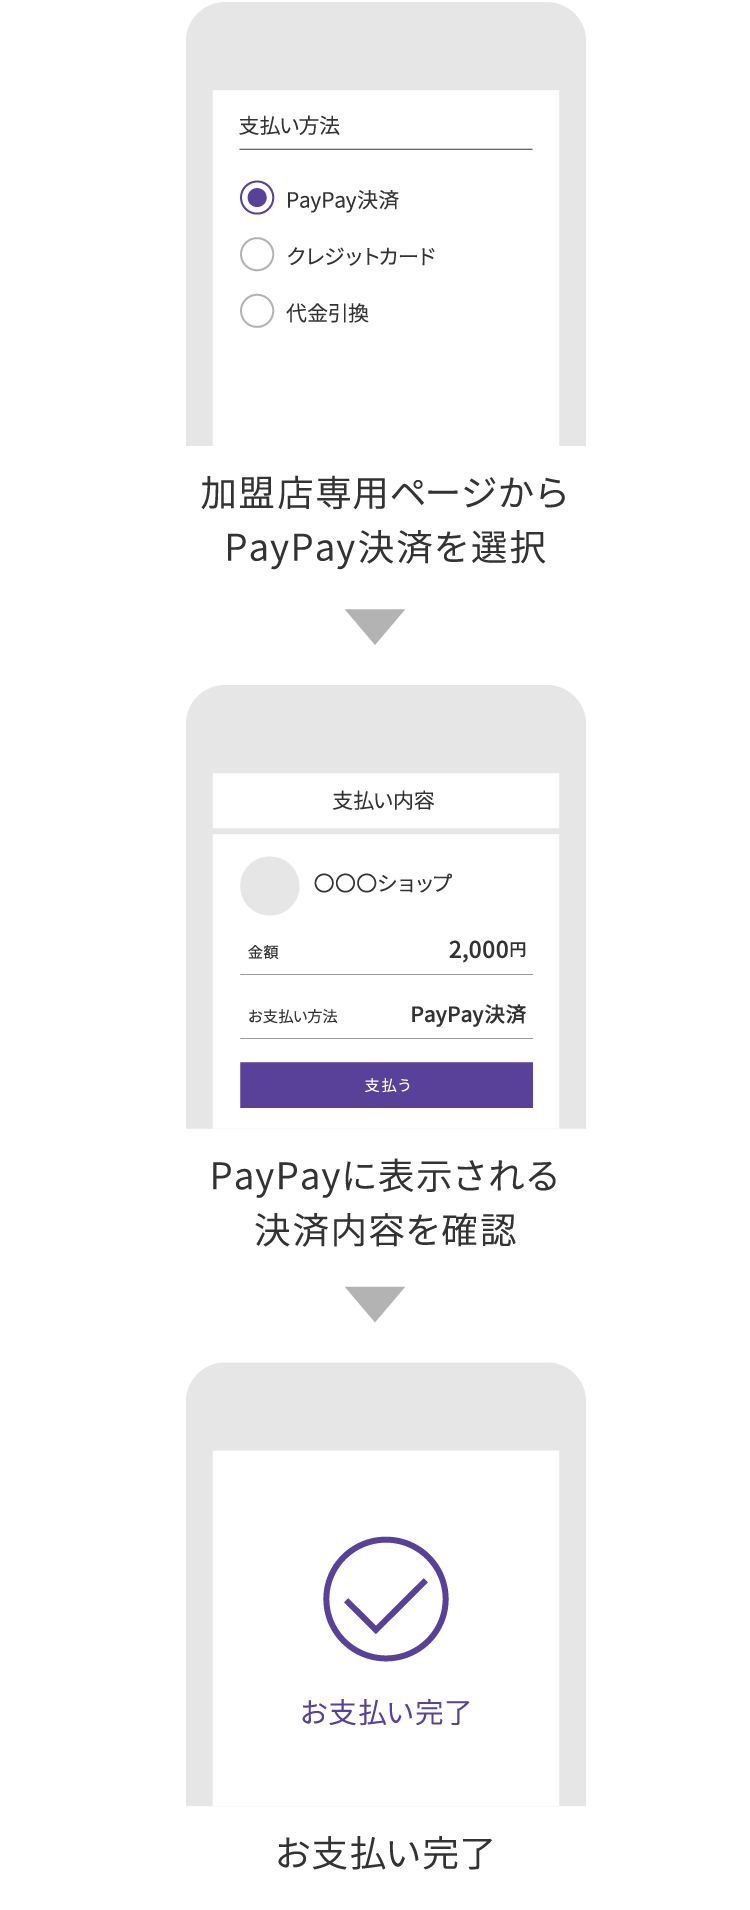 PayPay オンライン決済の流れ